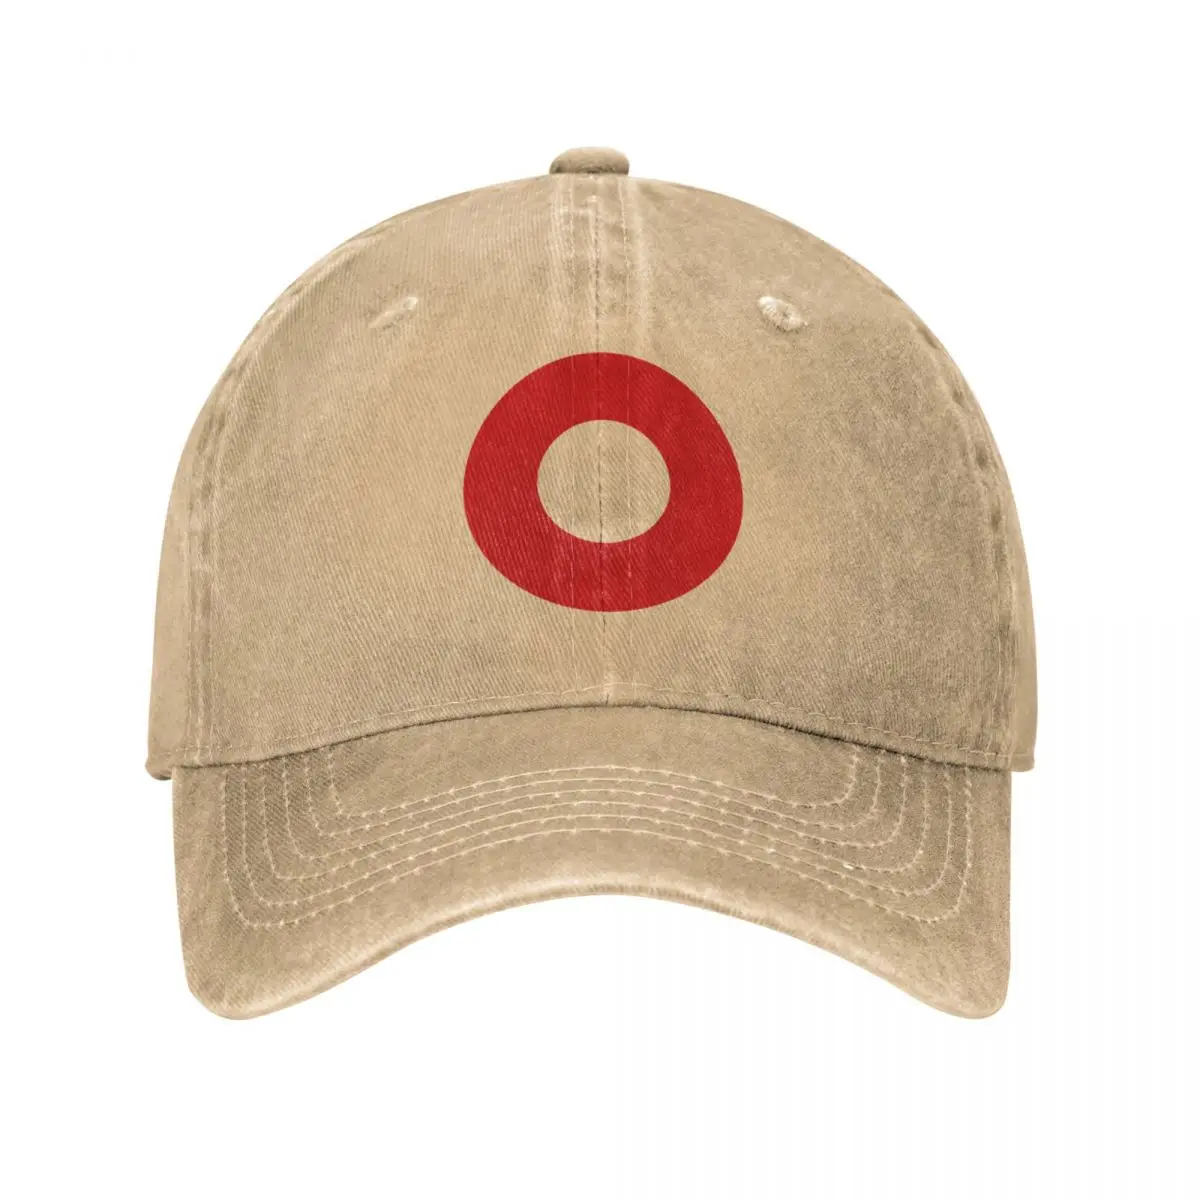 

Phish Fishman Donut Cap Cowboy Hat military tactical cap Brand man caps Mountaineering Man cap Women's